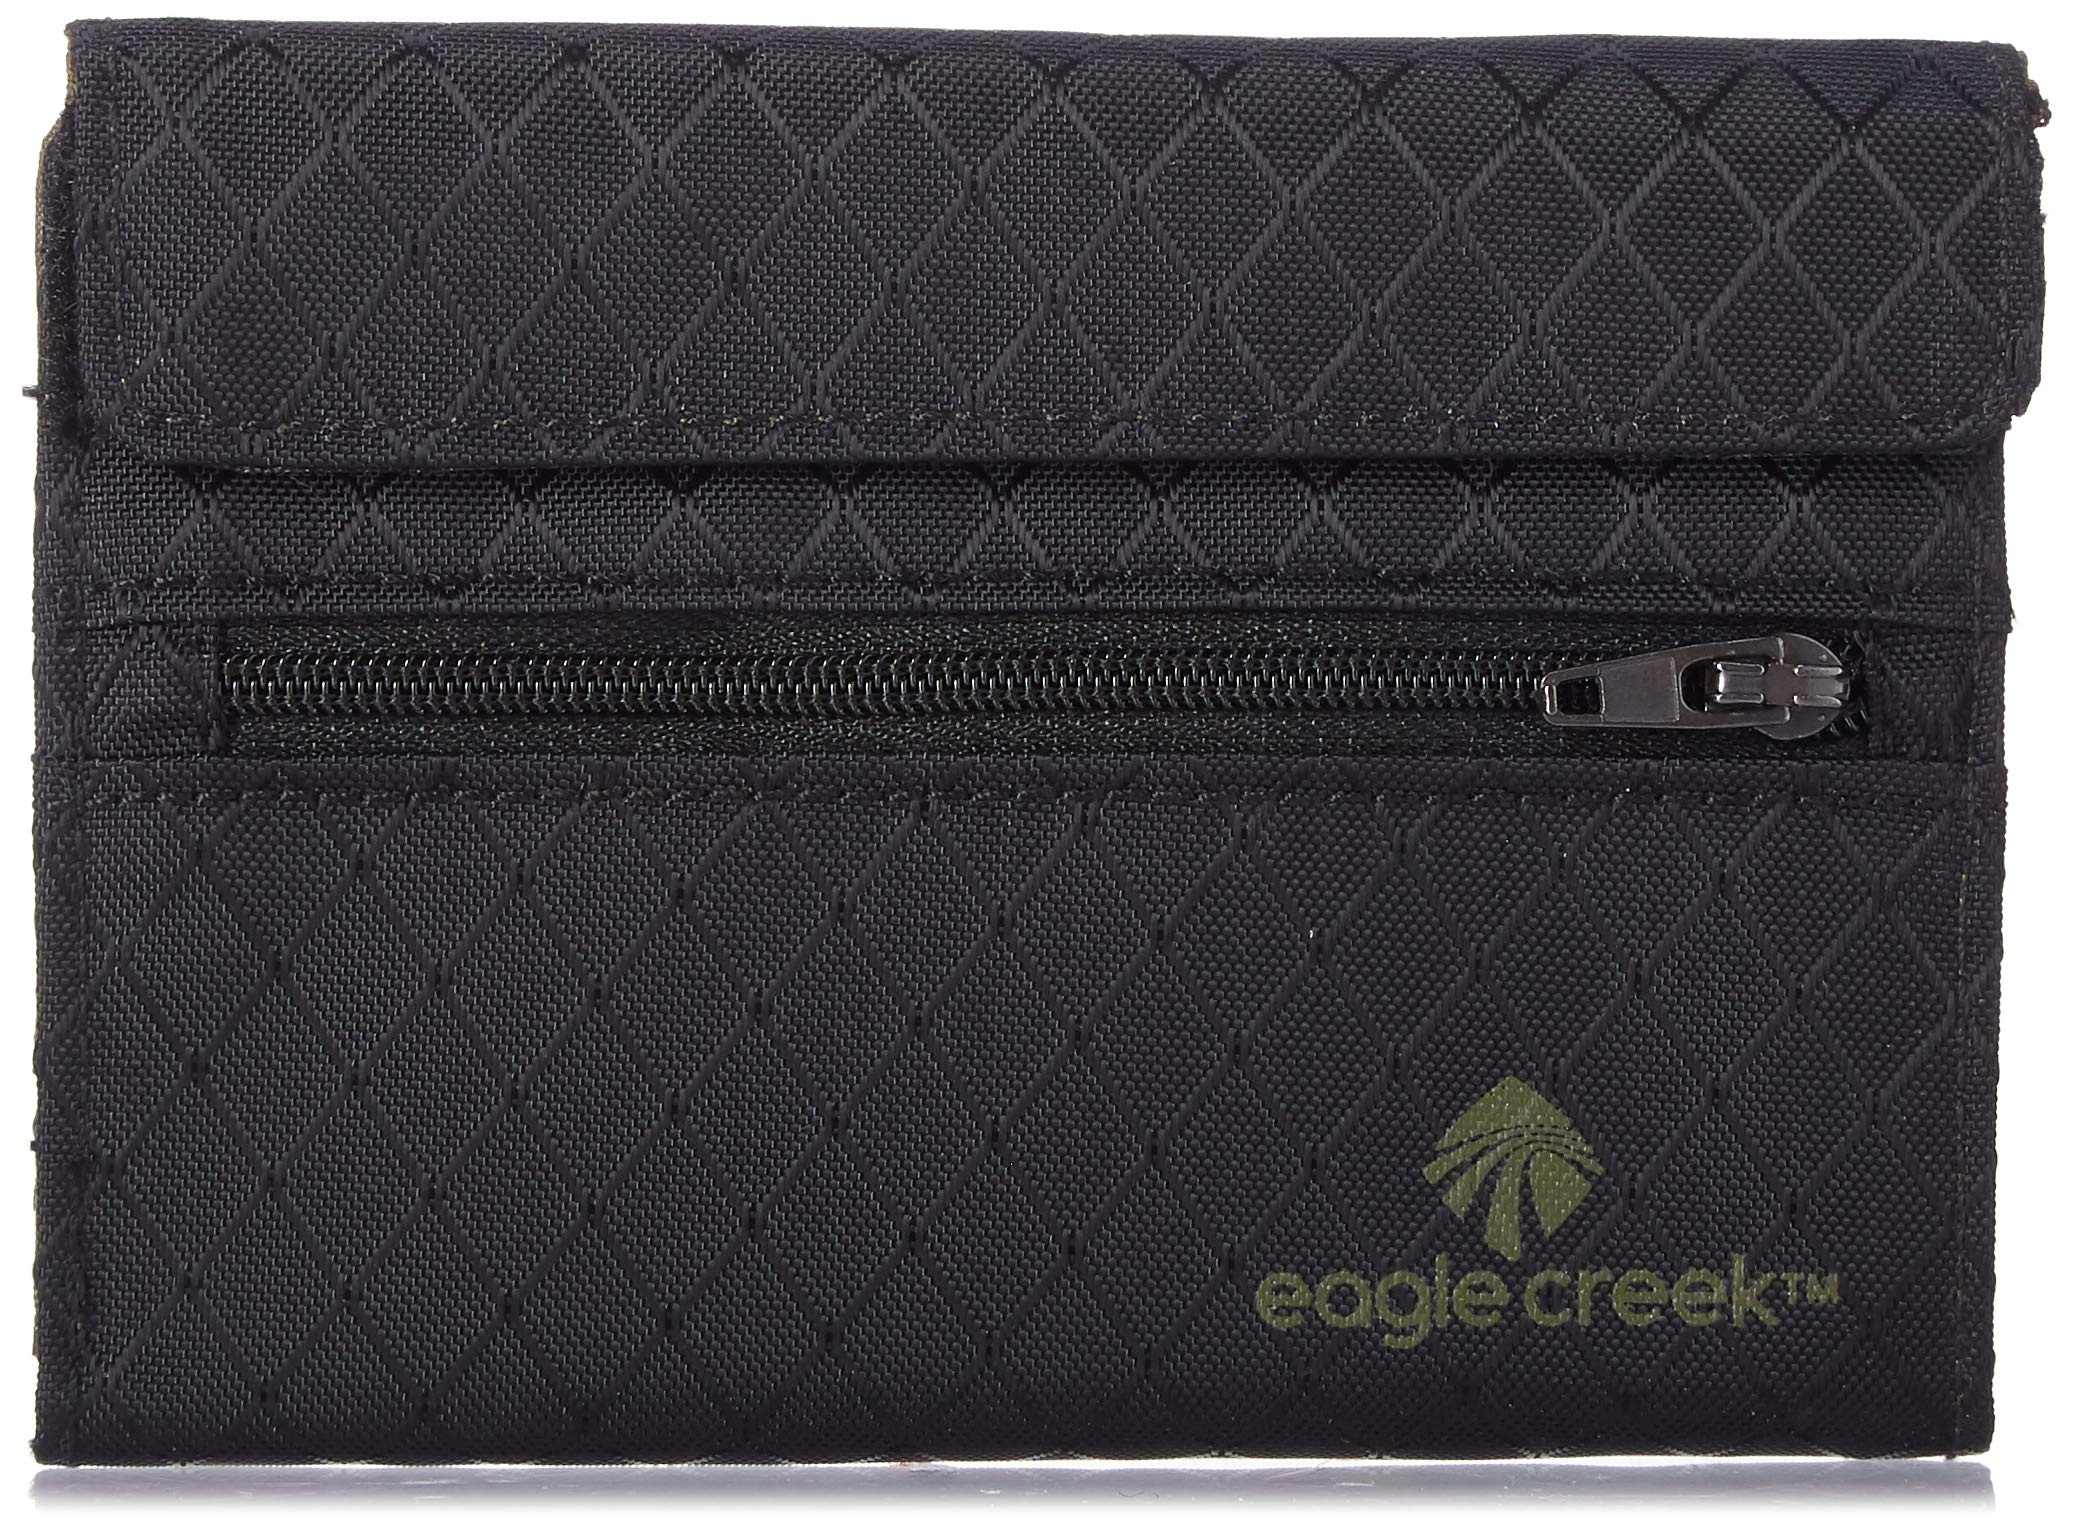 Eagle Creek Unisex-Erwachsene RFID International Tri-fold Wallet, Jet Black Geldbörse